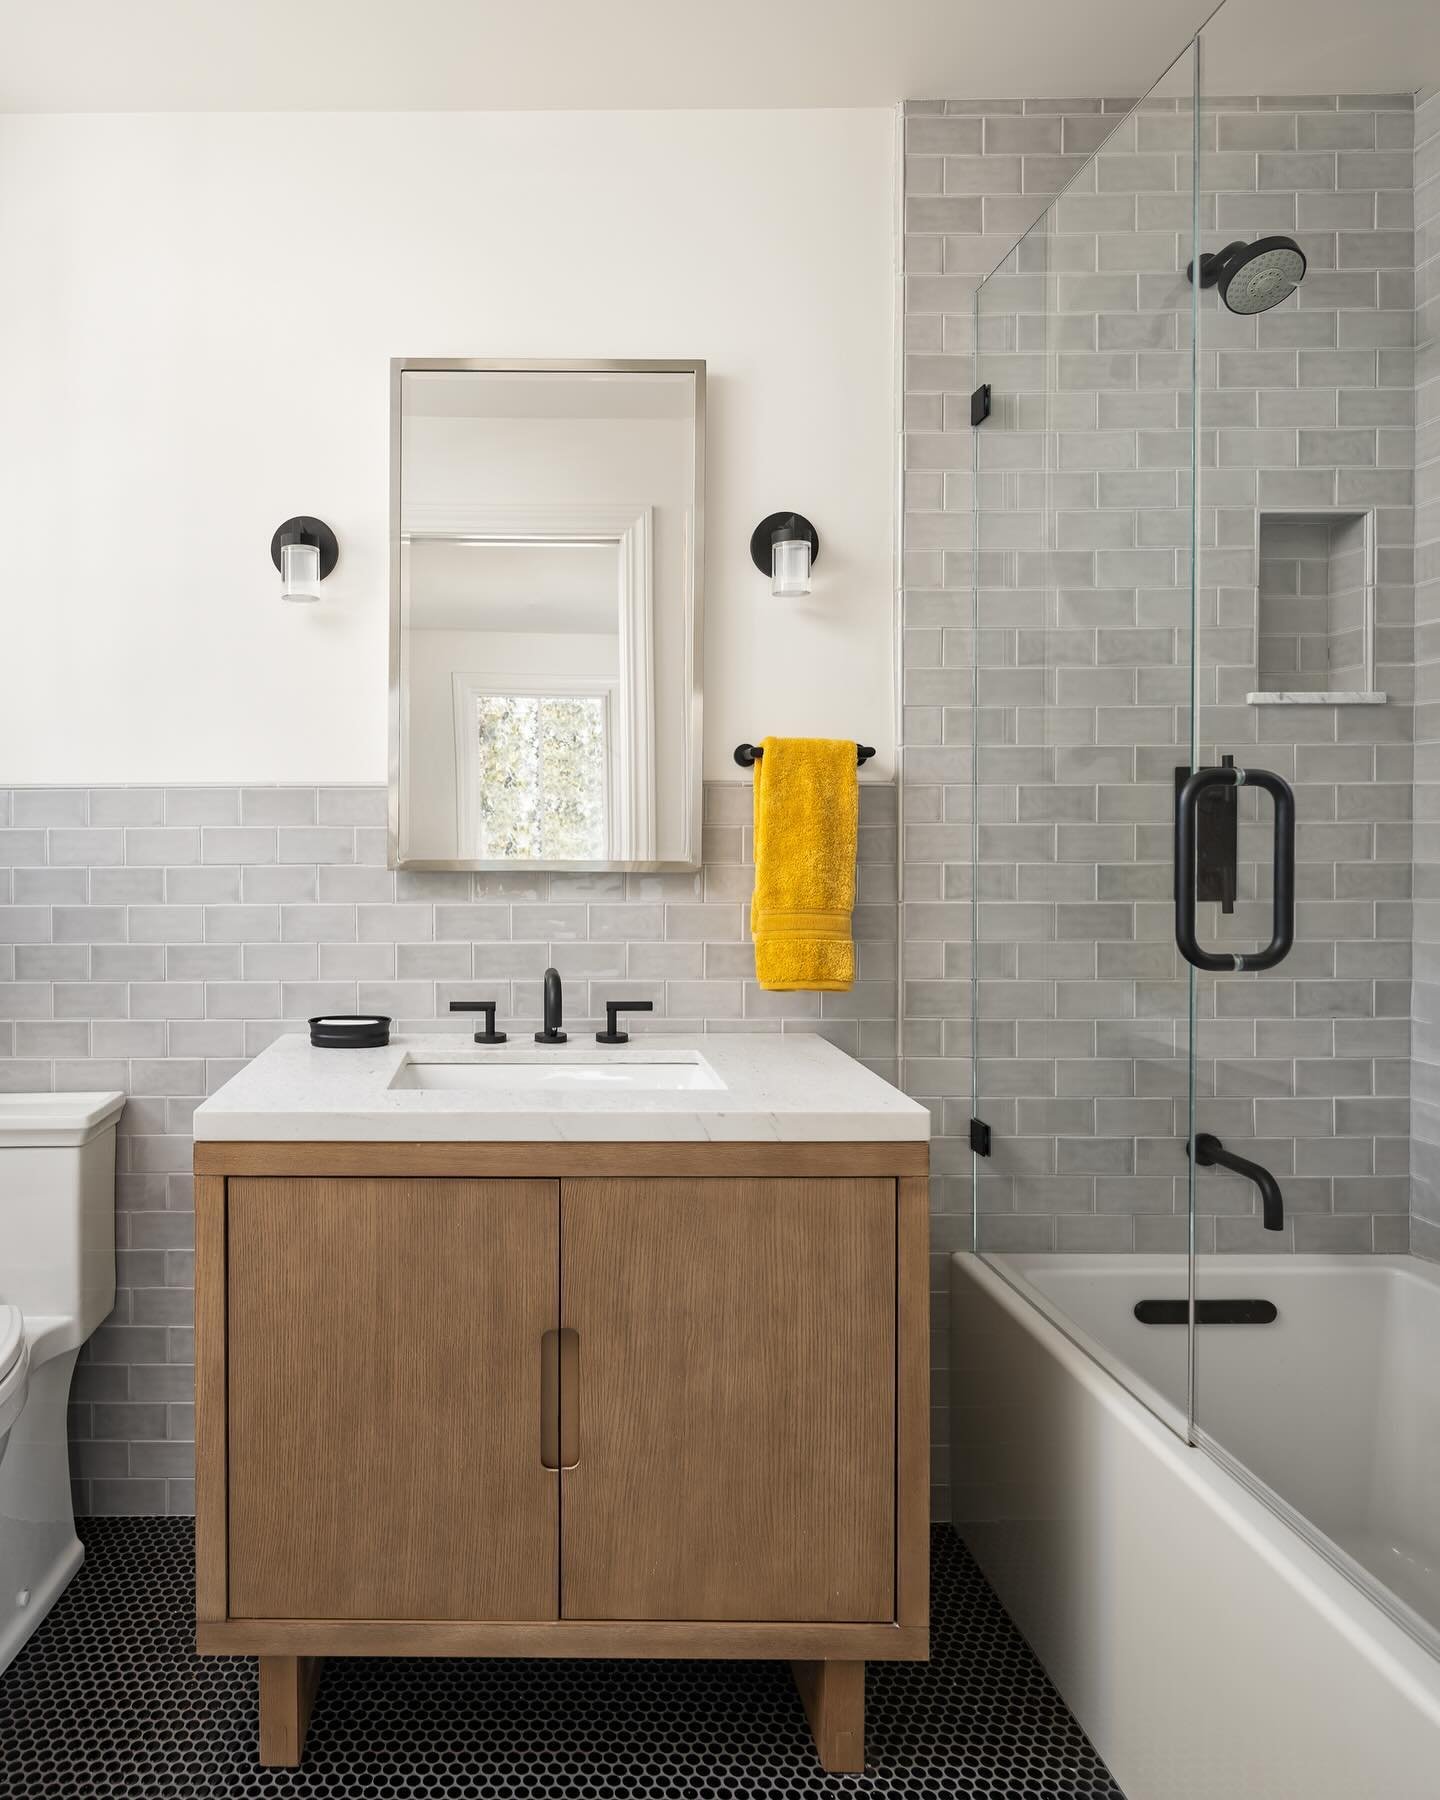 Classic, crisp and all boy! 

#bathroomremodel #renovation #bathroomgoals #interiordesign #bathroomdesign #interior